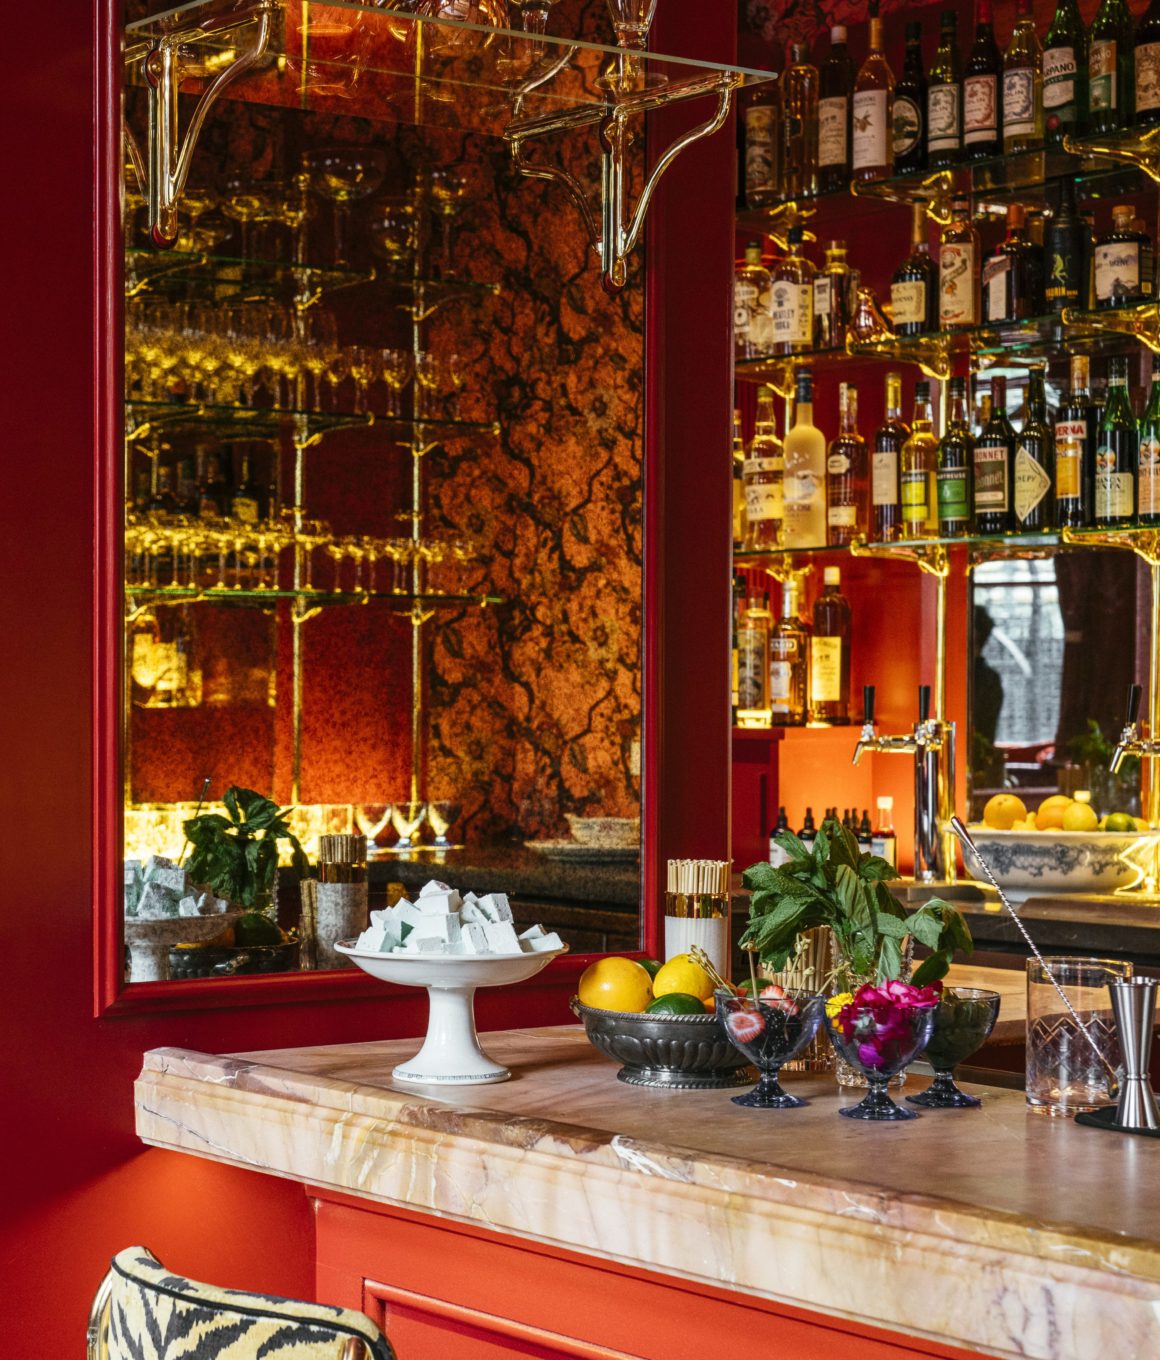 Luxuriously styled bar at Bar Marilou